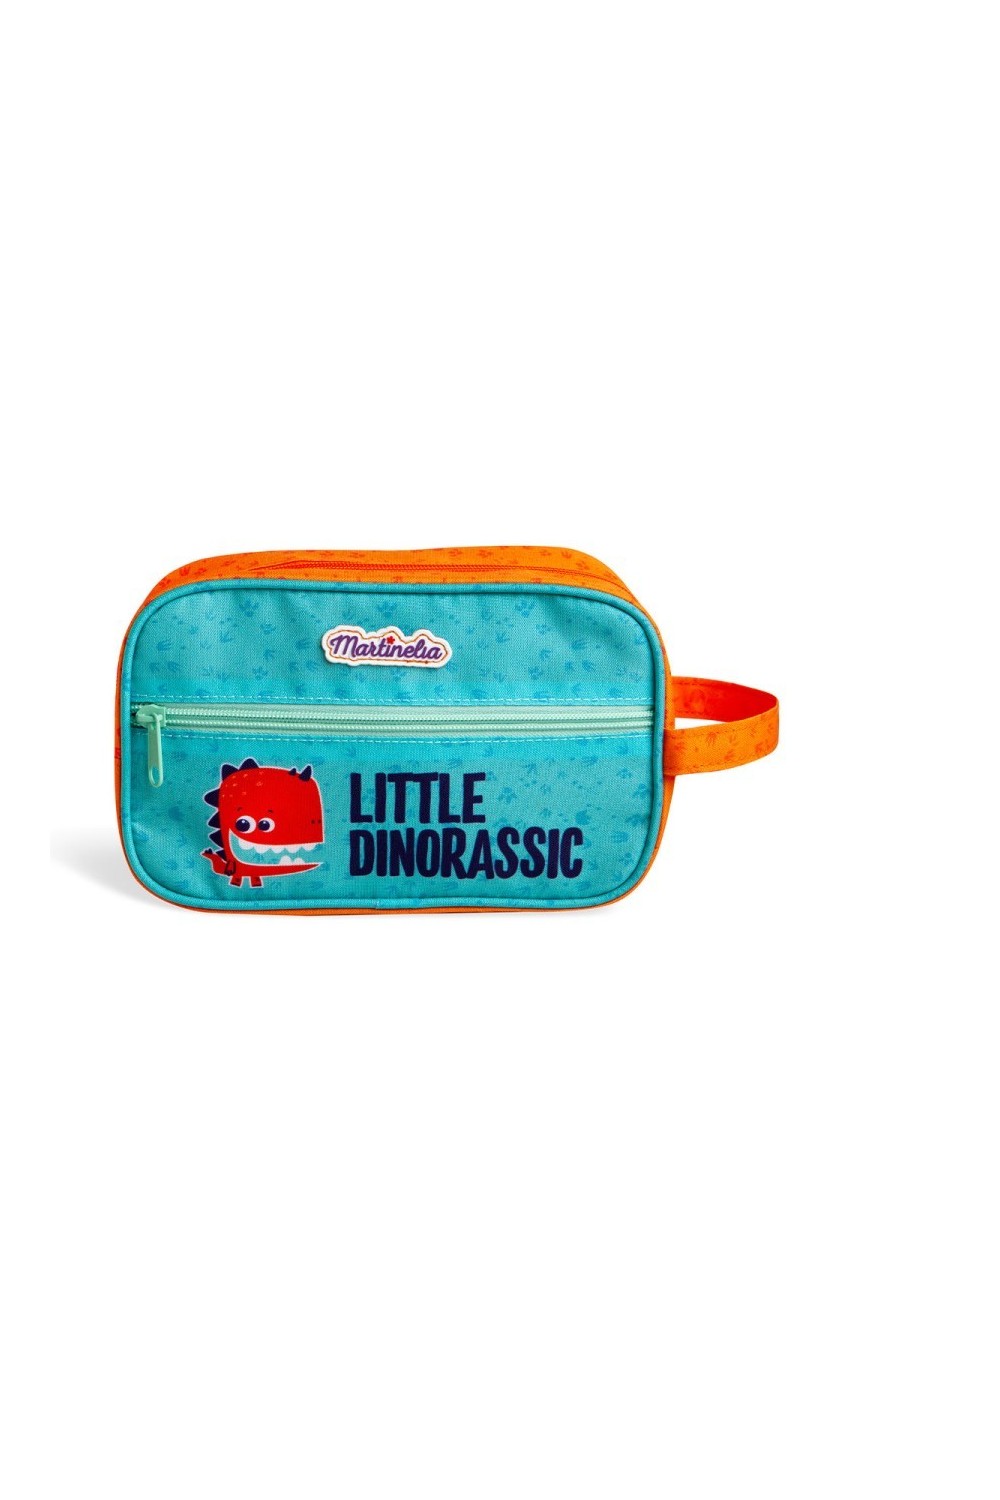 Martinelia Little Dinorassic Bag 1 U